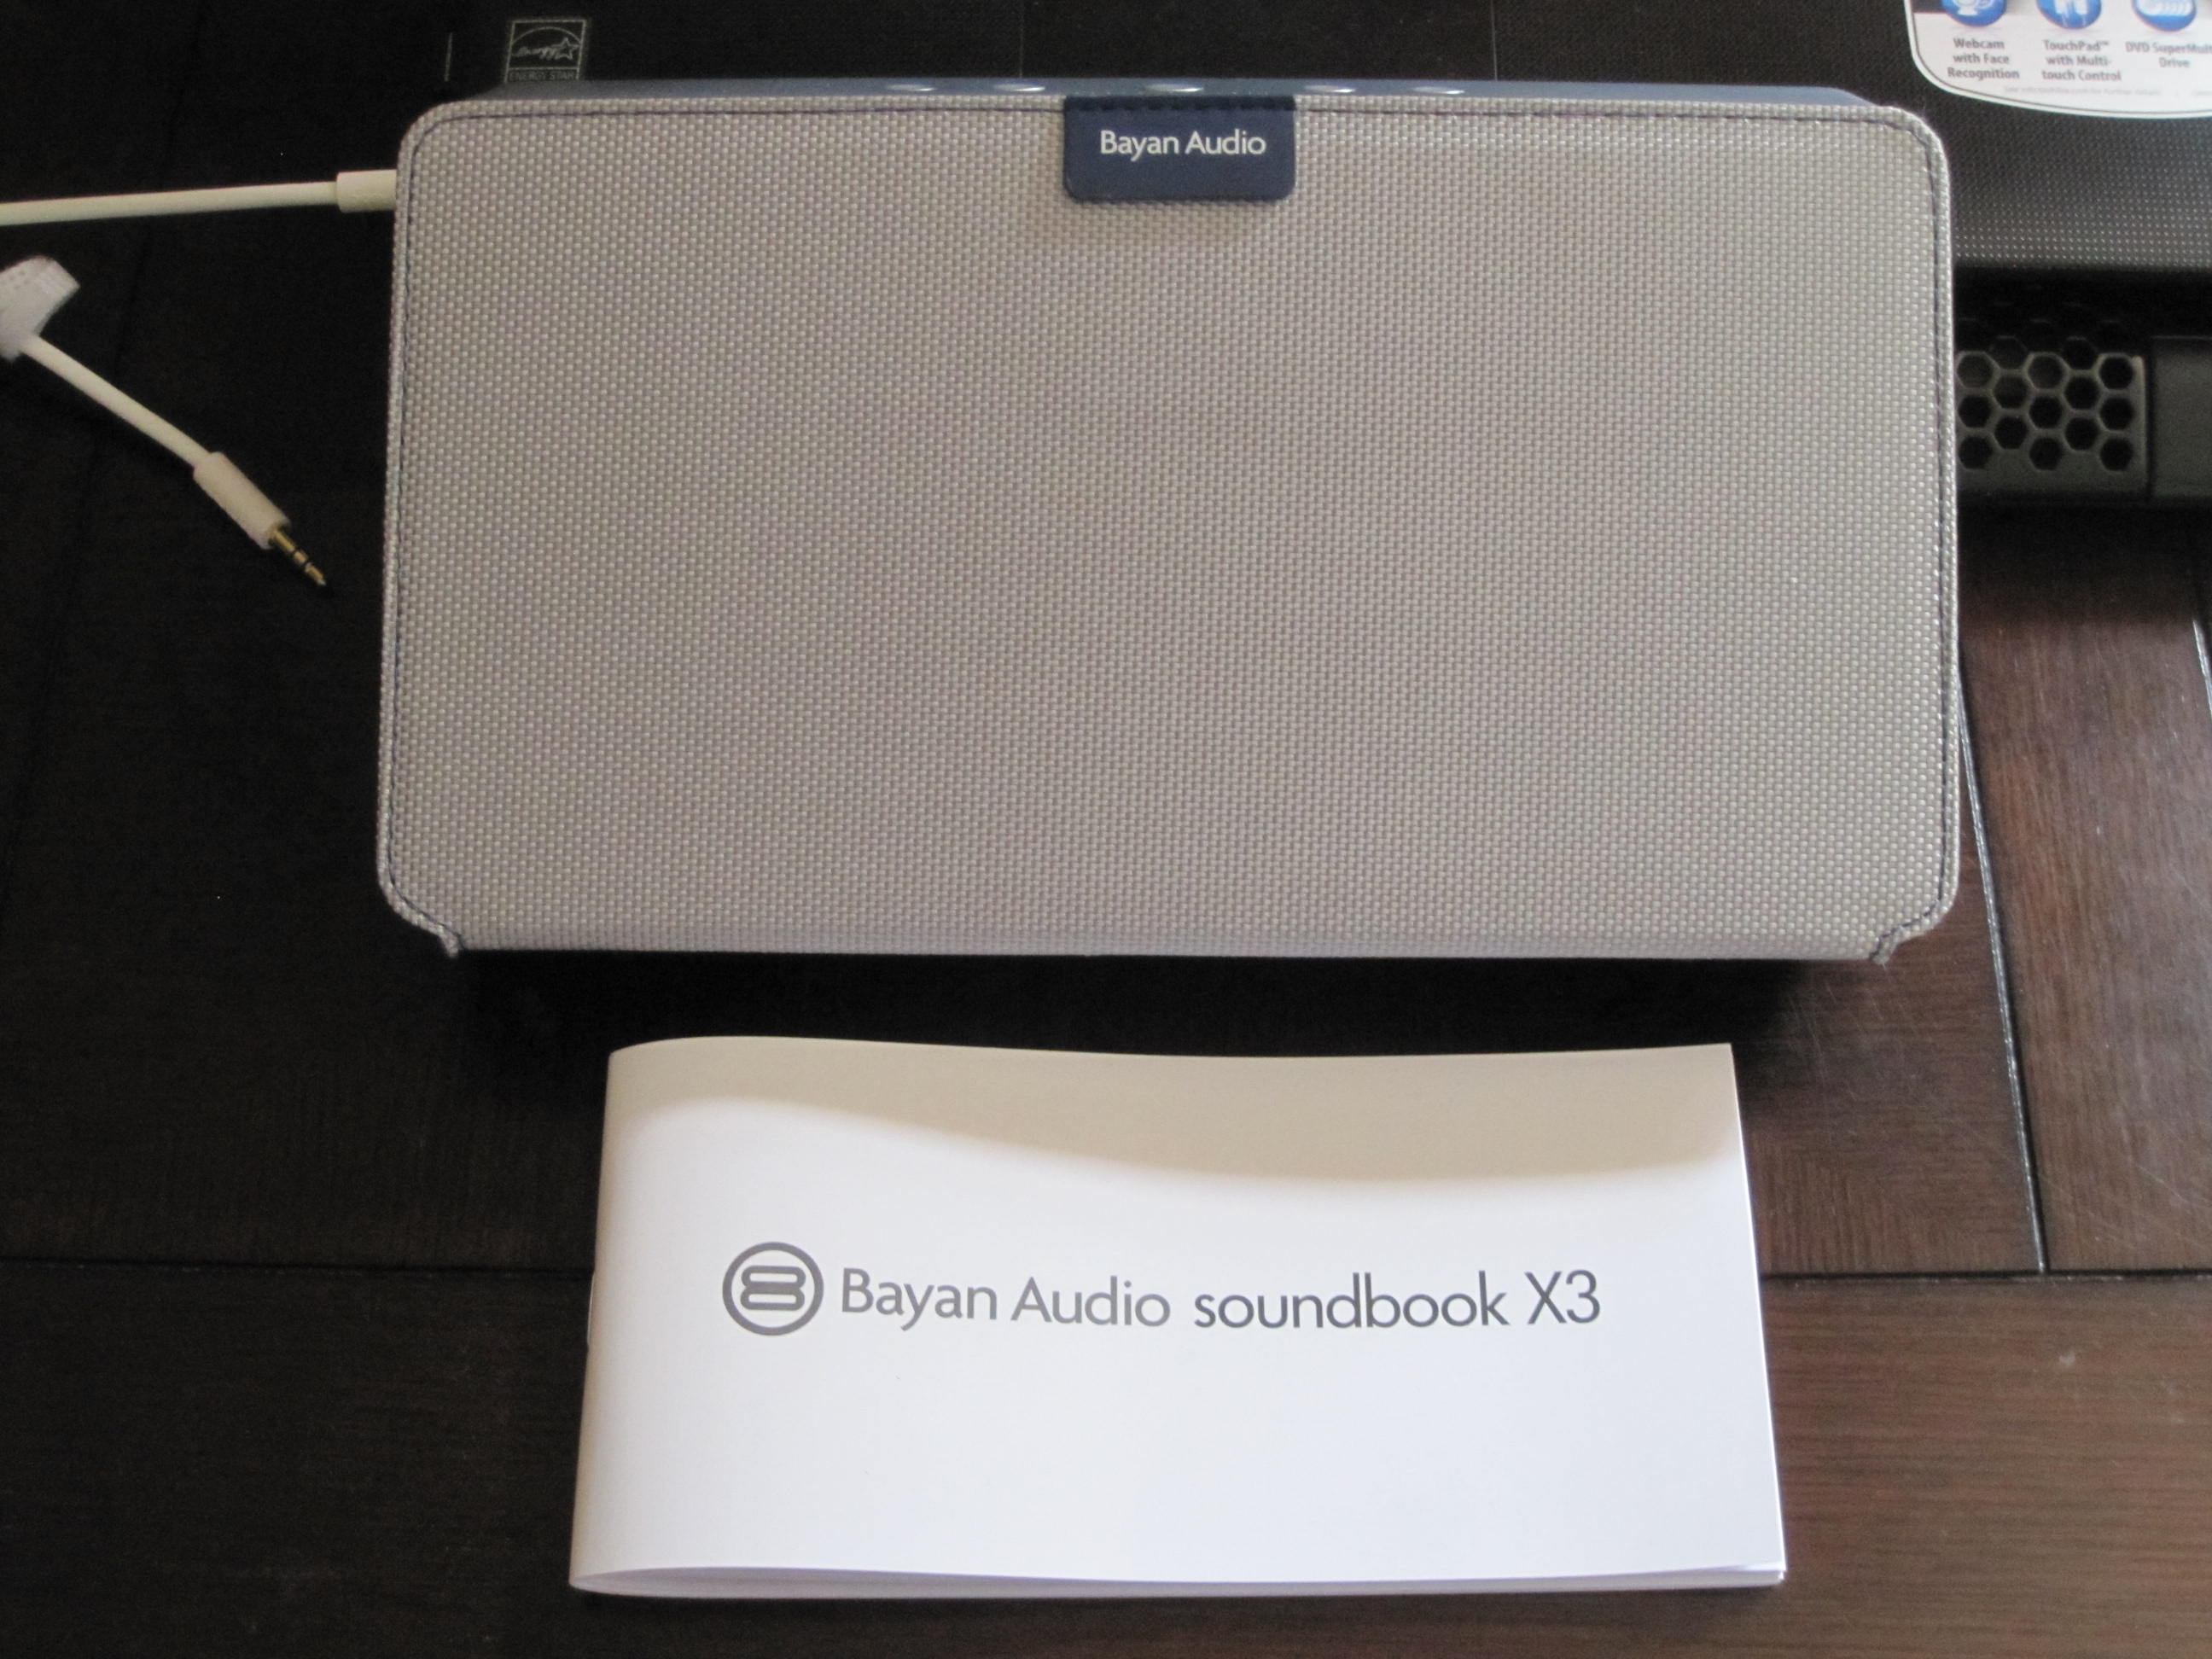 The Soundbook X3 by Bayan Audio